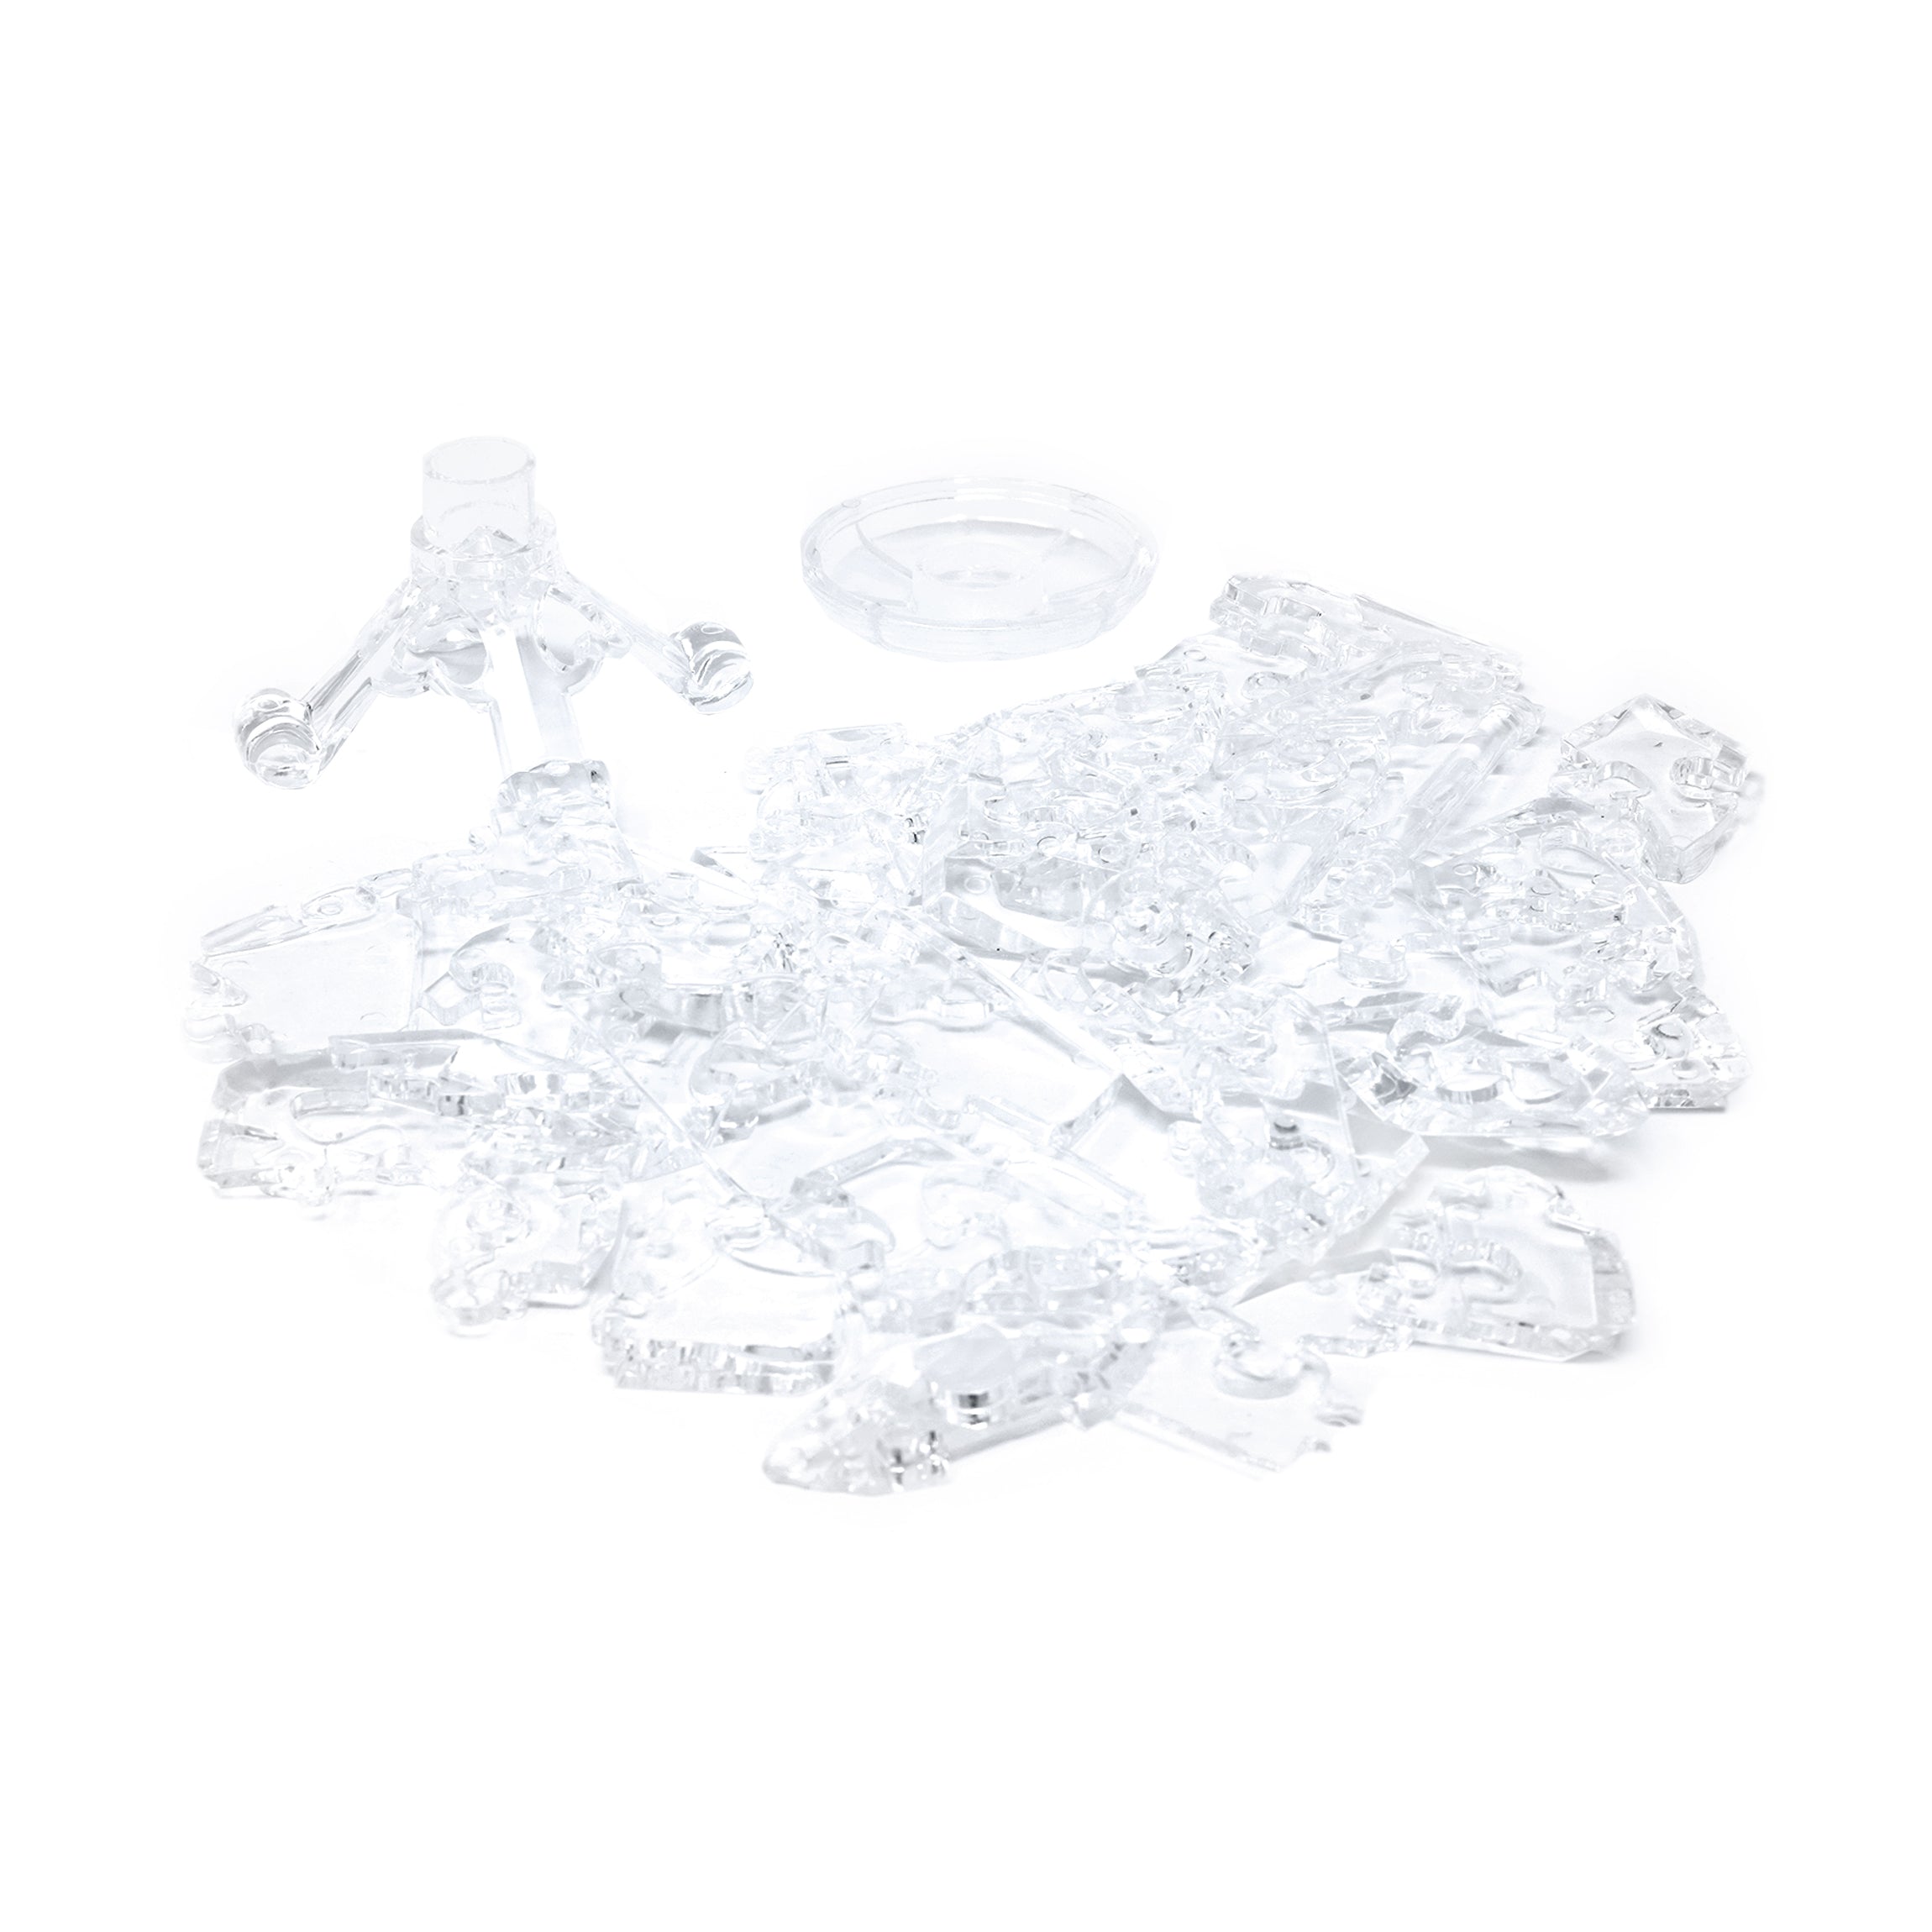 AreYouGame.com 3D Crystal Puzzle - Diamond: 43 Pieces 